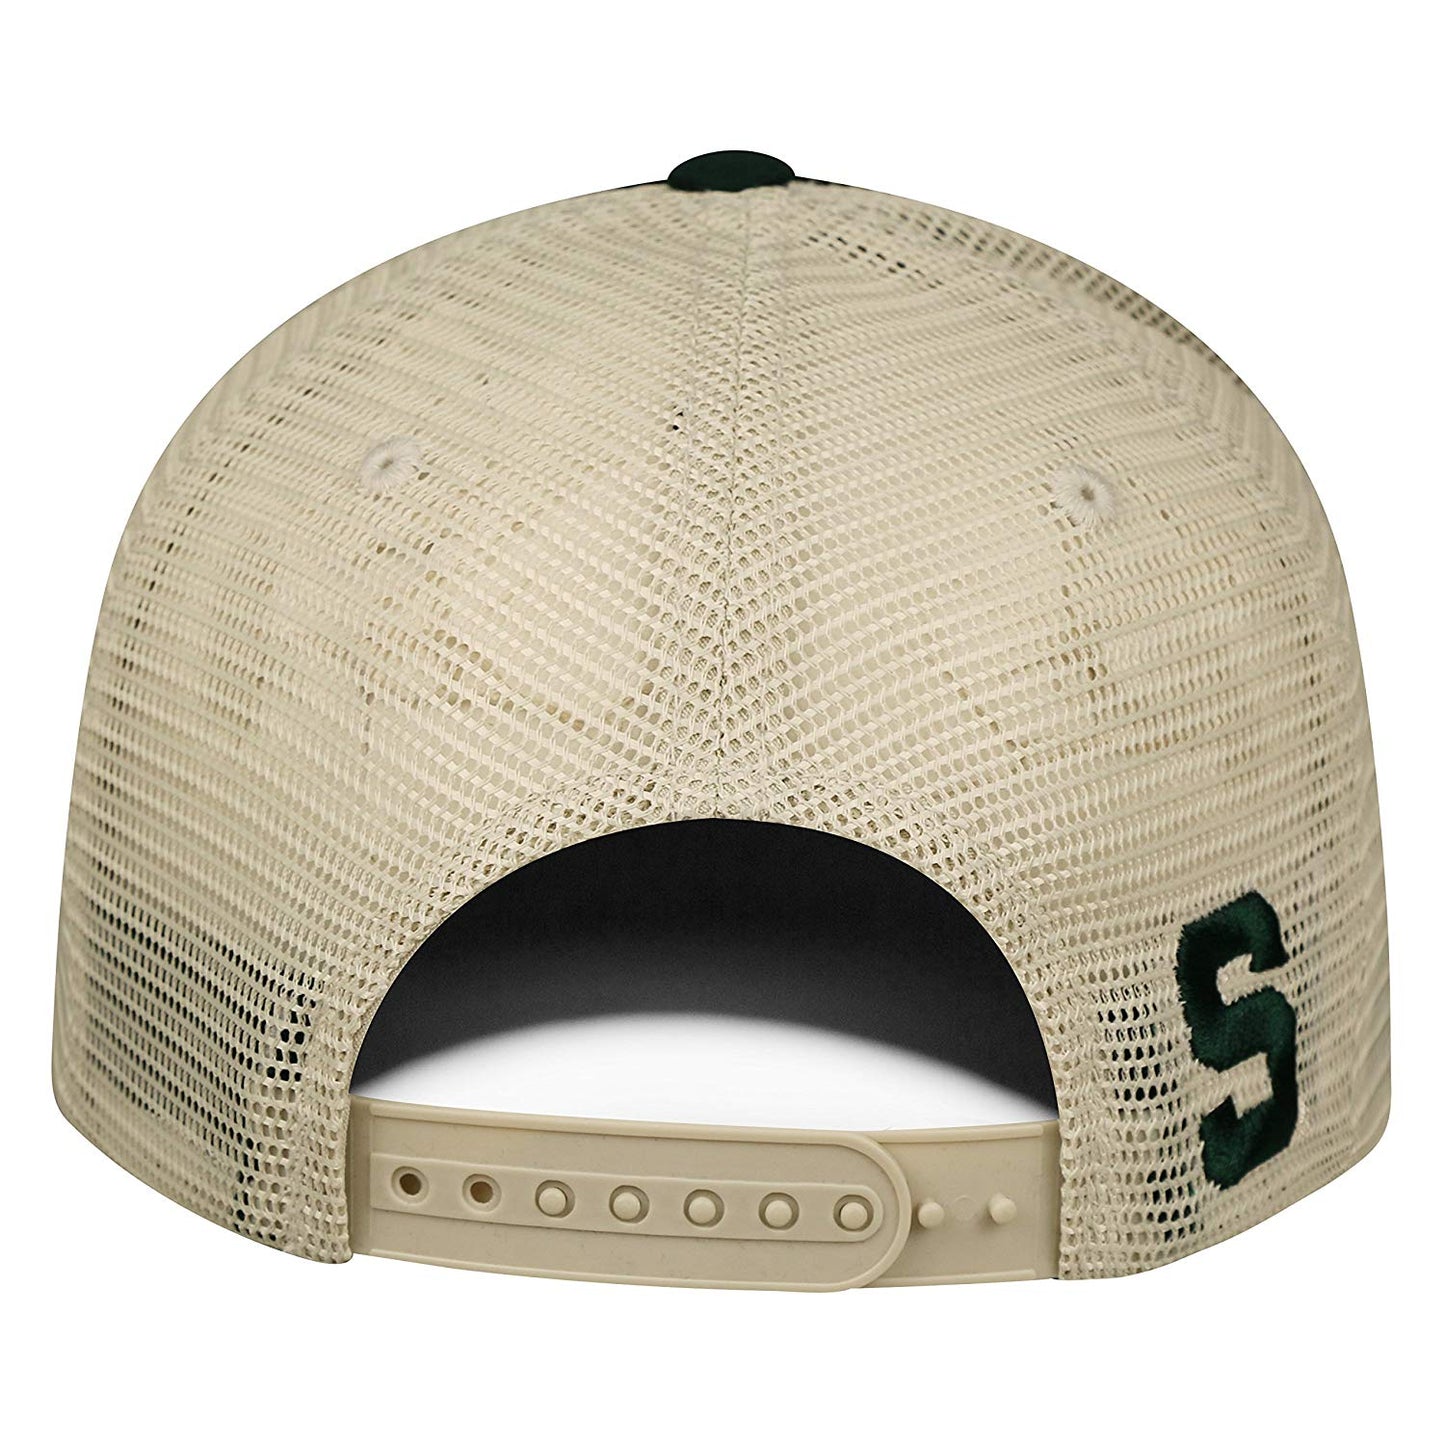 Michigan State Spartans Ranger Trucker Adjustable Snapback Hat